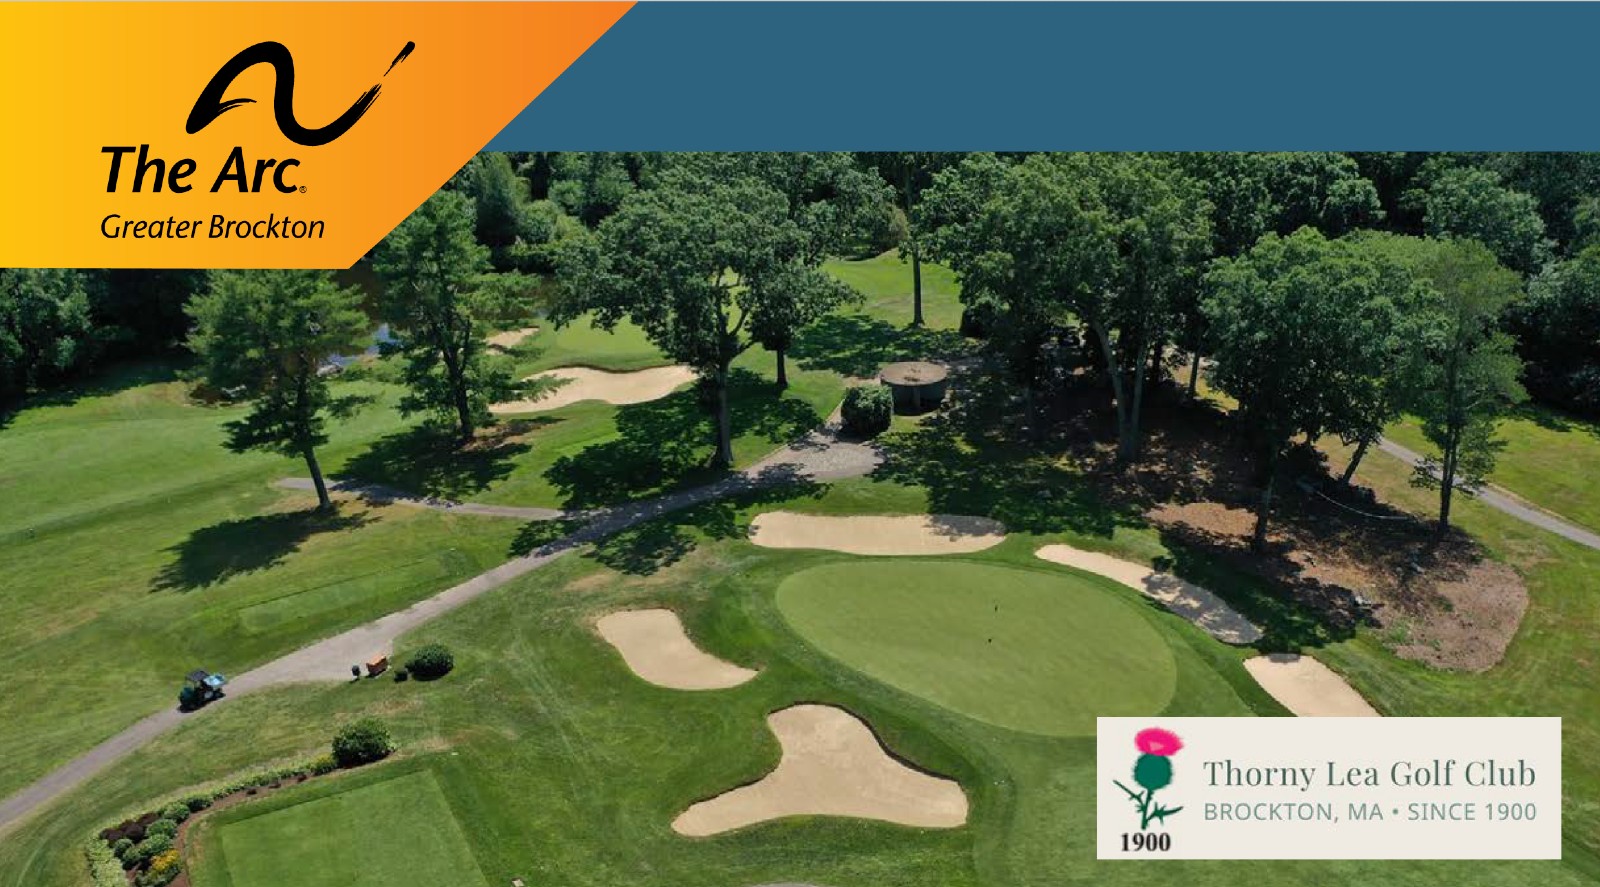 Thorny Lea Golf Club - location of 2022 golf tournament